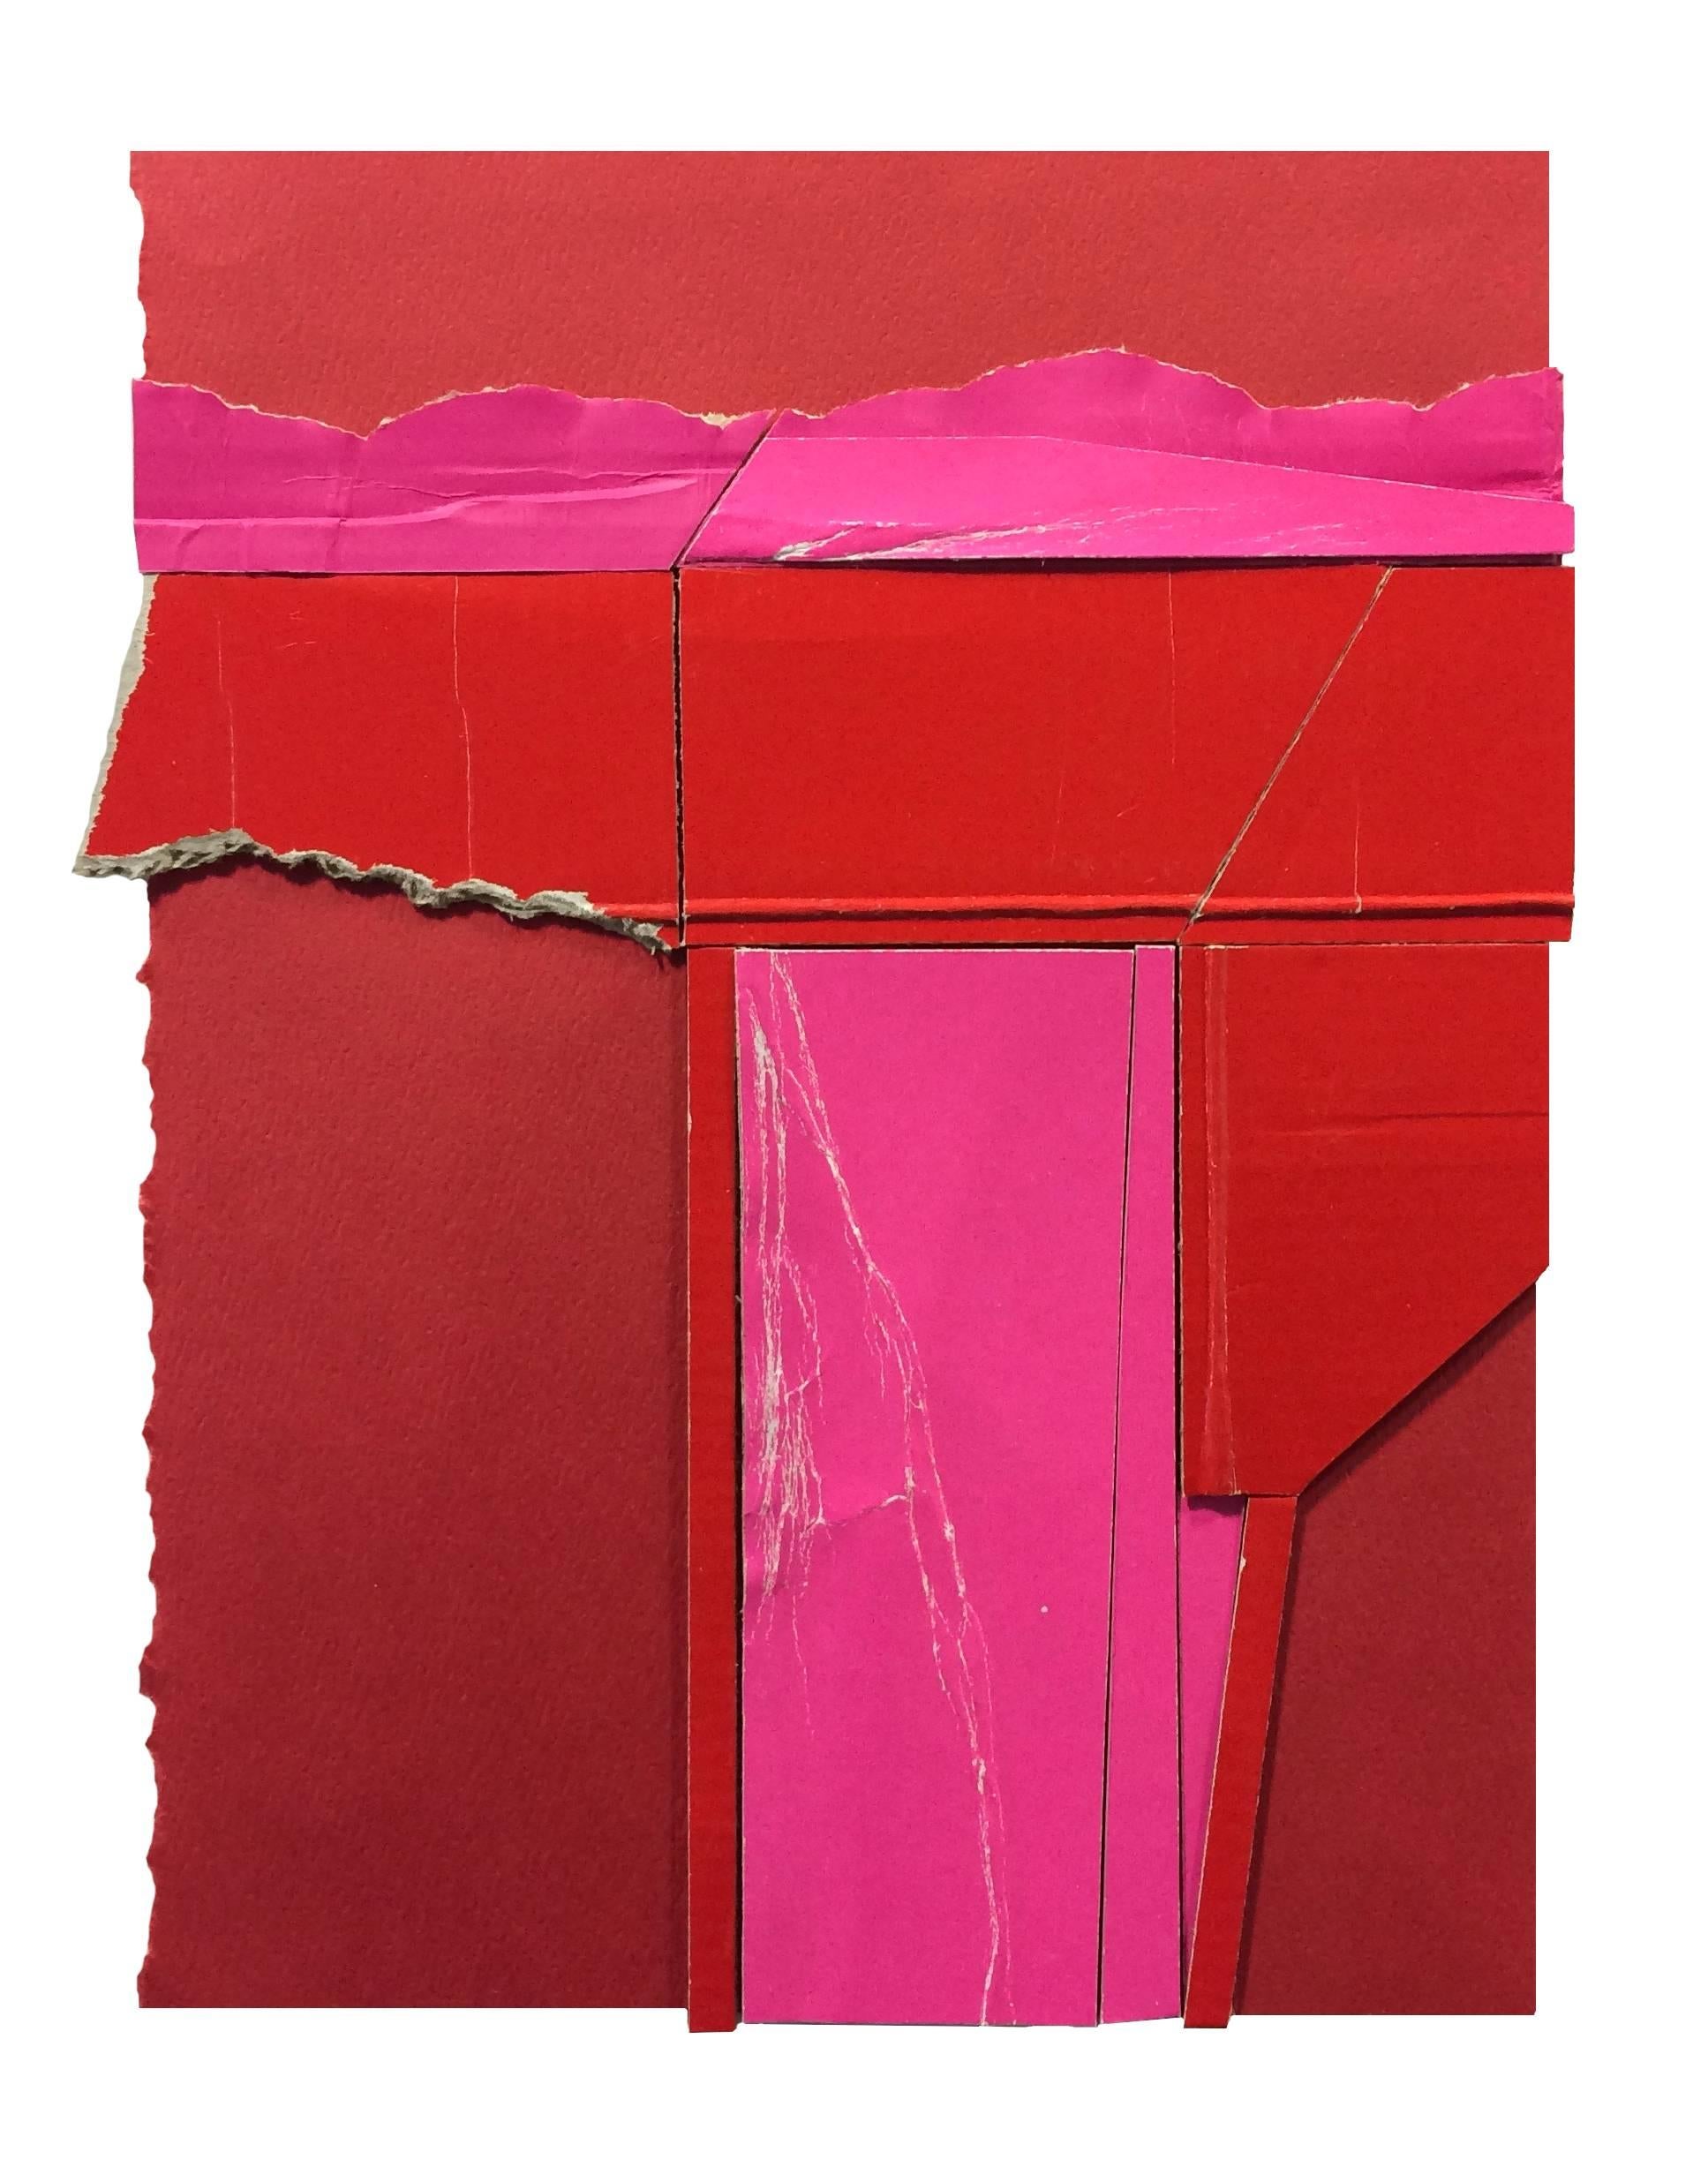 Ryan Sarah Murphy, 'Pike', 2016, Found Objects, Cardboard, Laid Paper 